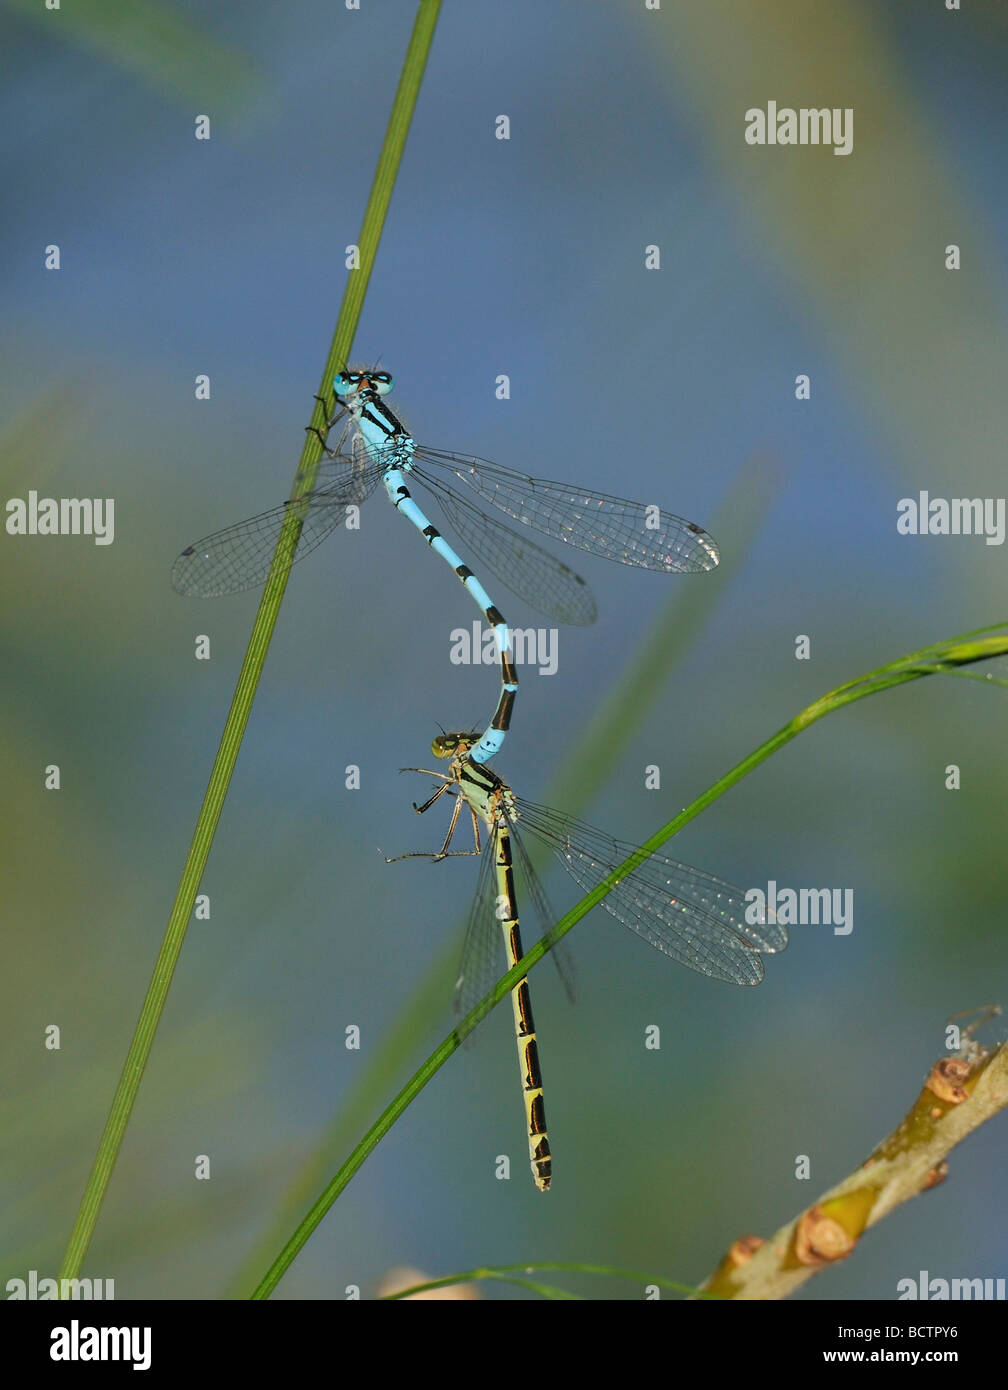 Comune Damselfly blu Enallagma cyathigerum coppia in tandem sul gambo di erba Foto Stock